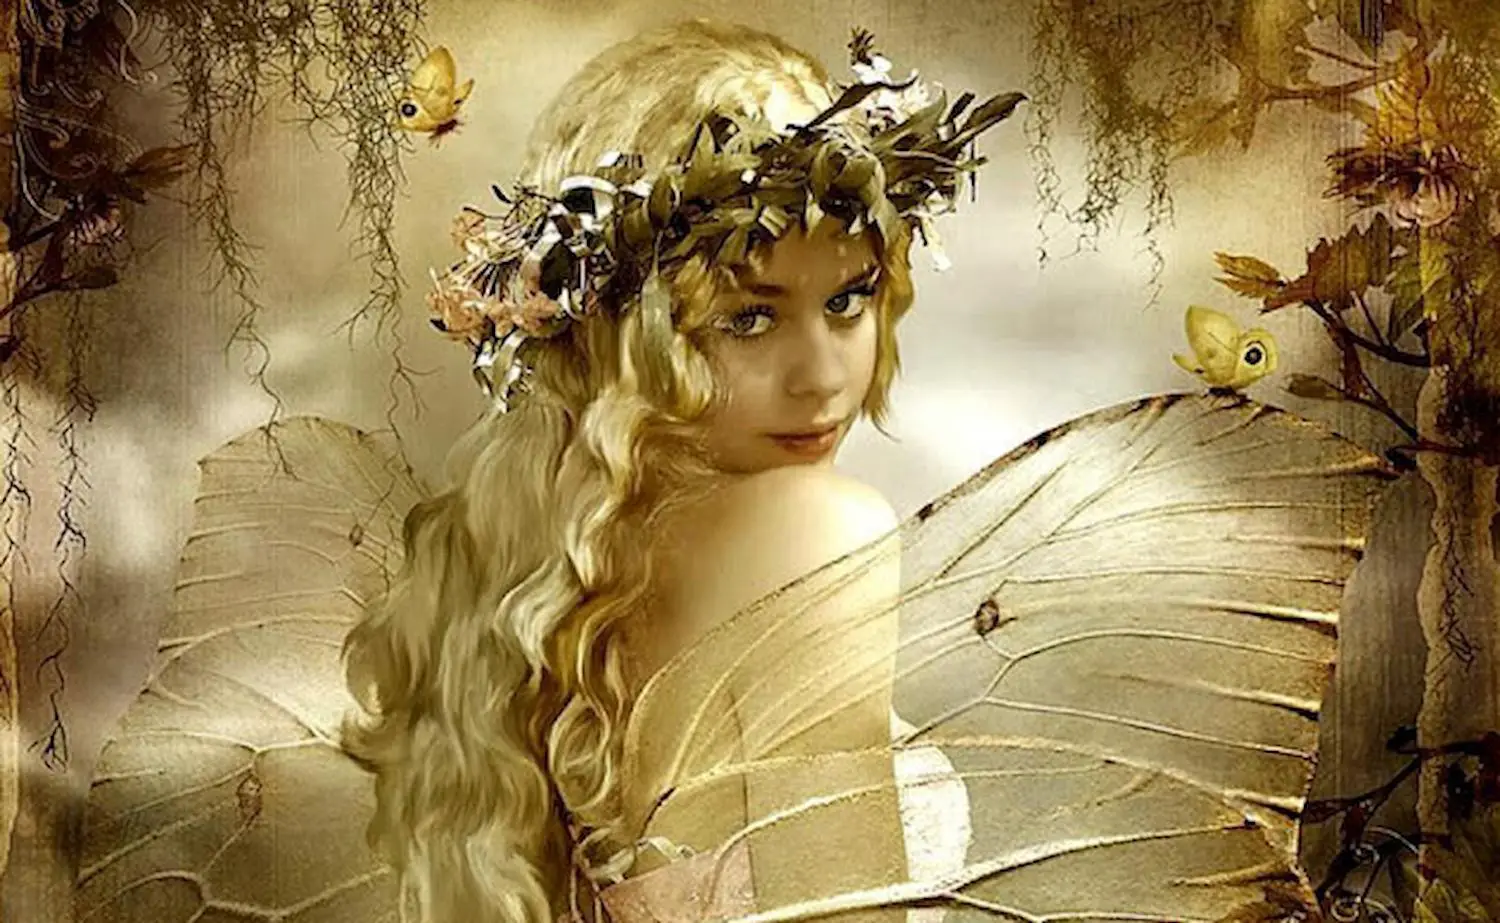 Slavic fairy